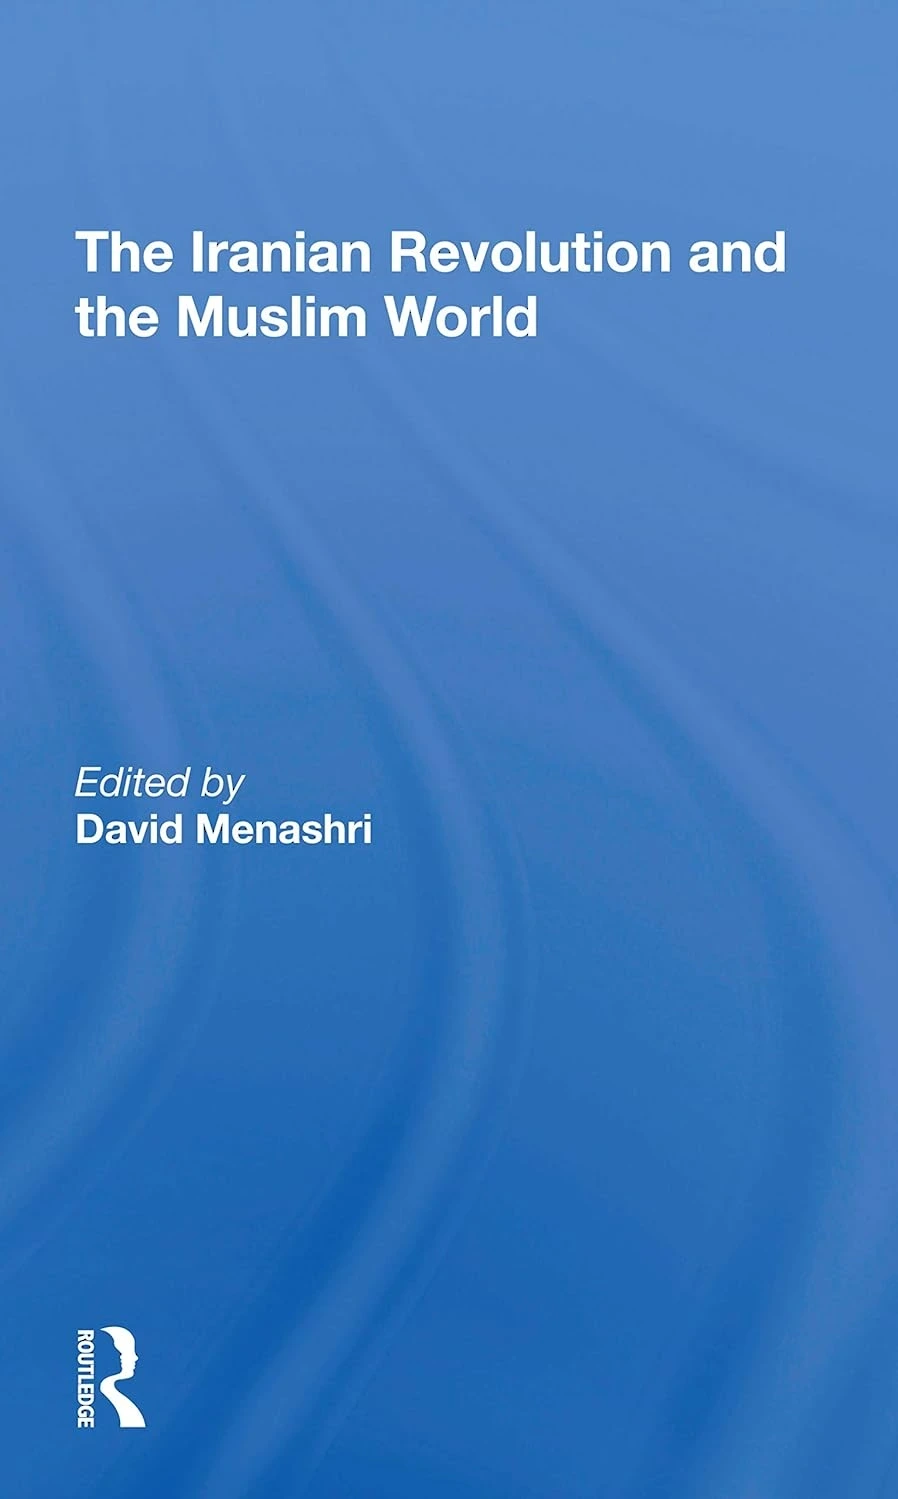 The Iranian Revolution and the Muslim World